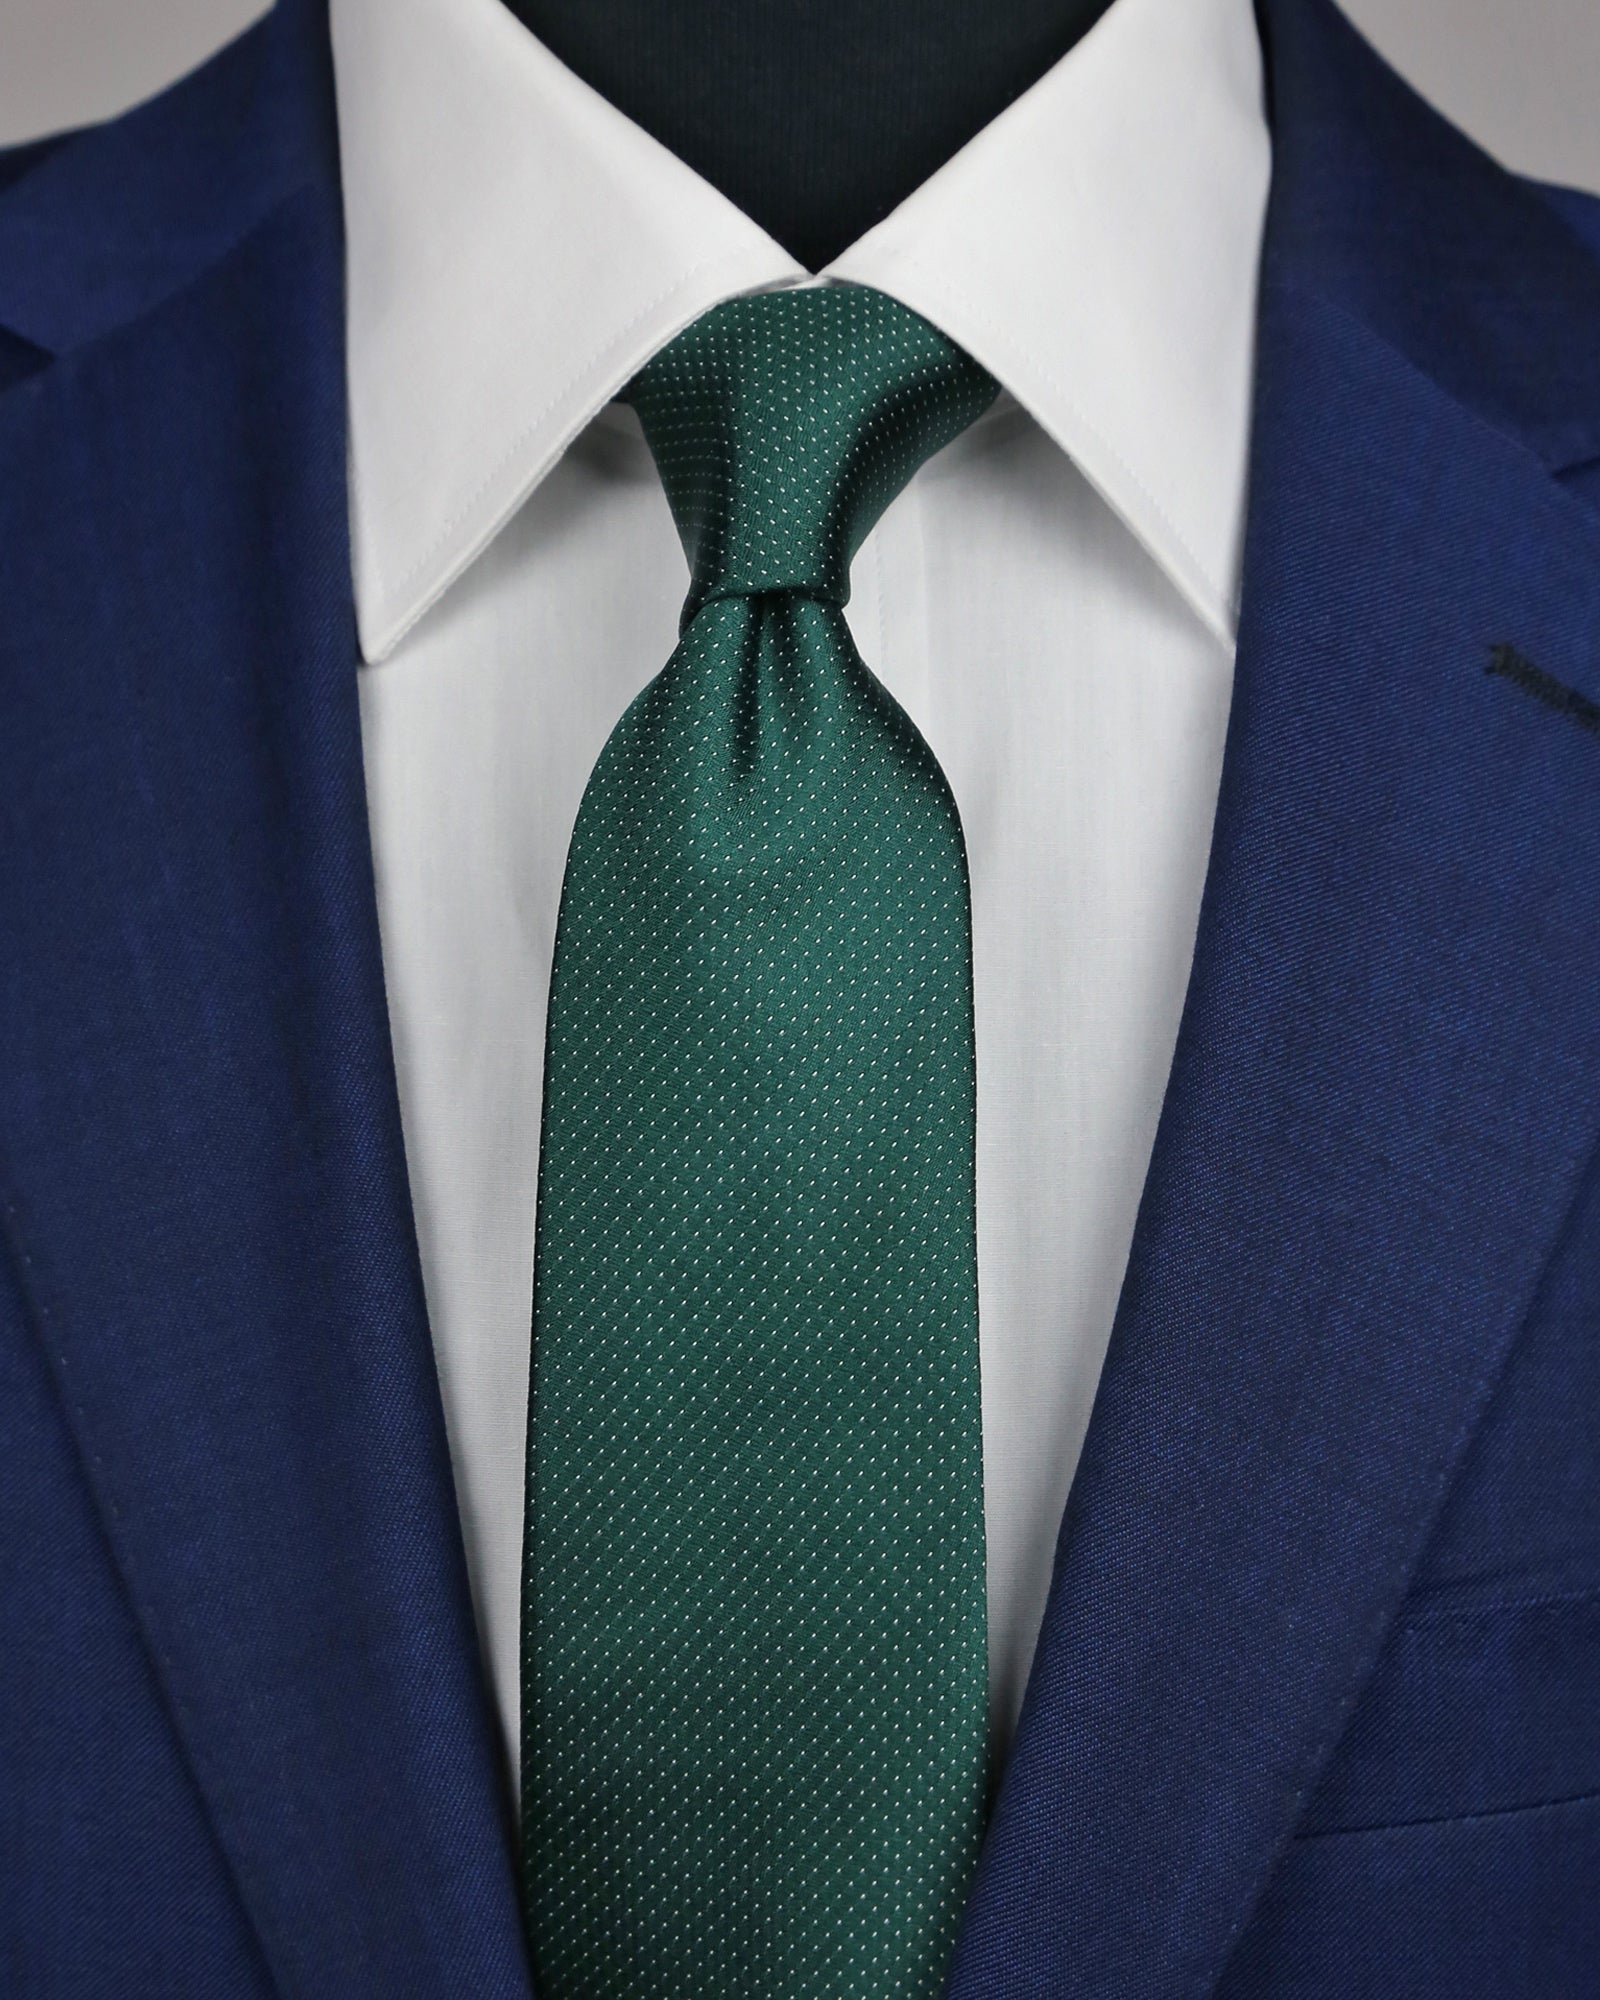 DÉCLIC Classic Microdot Tie - Dark Green